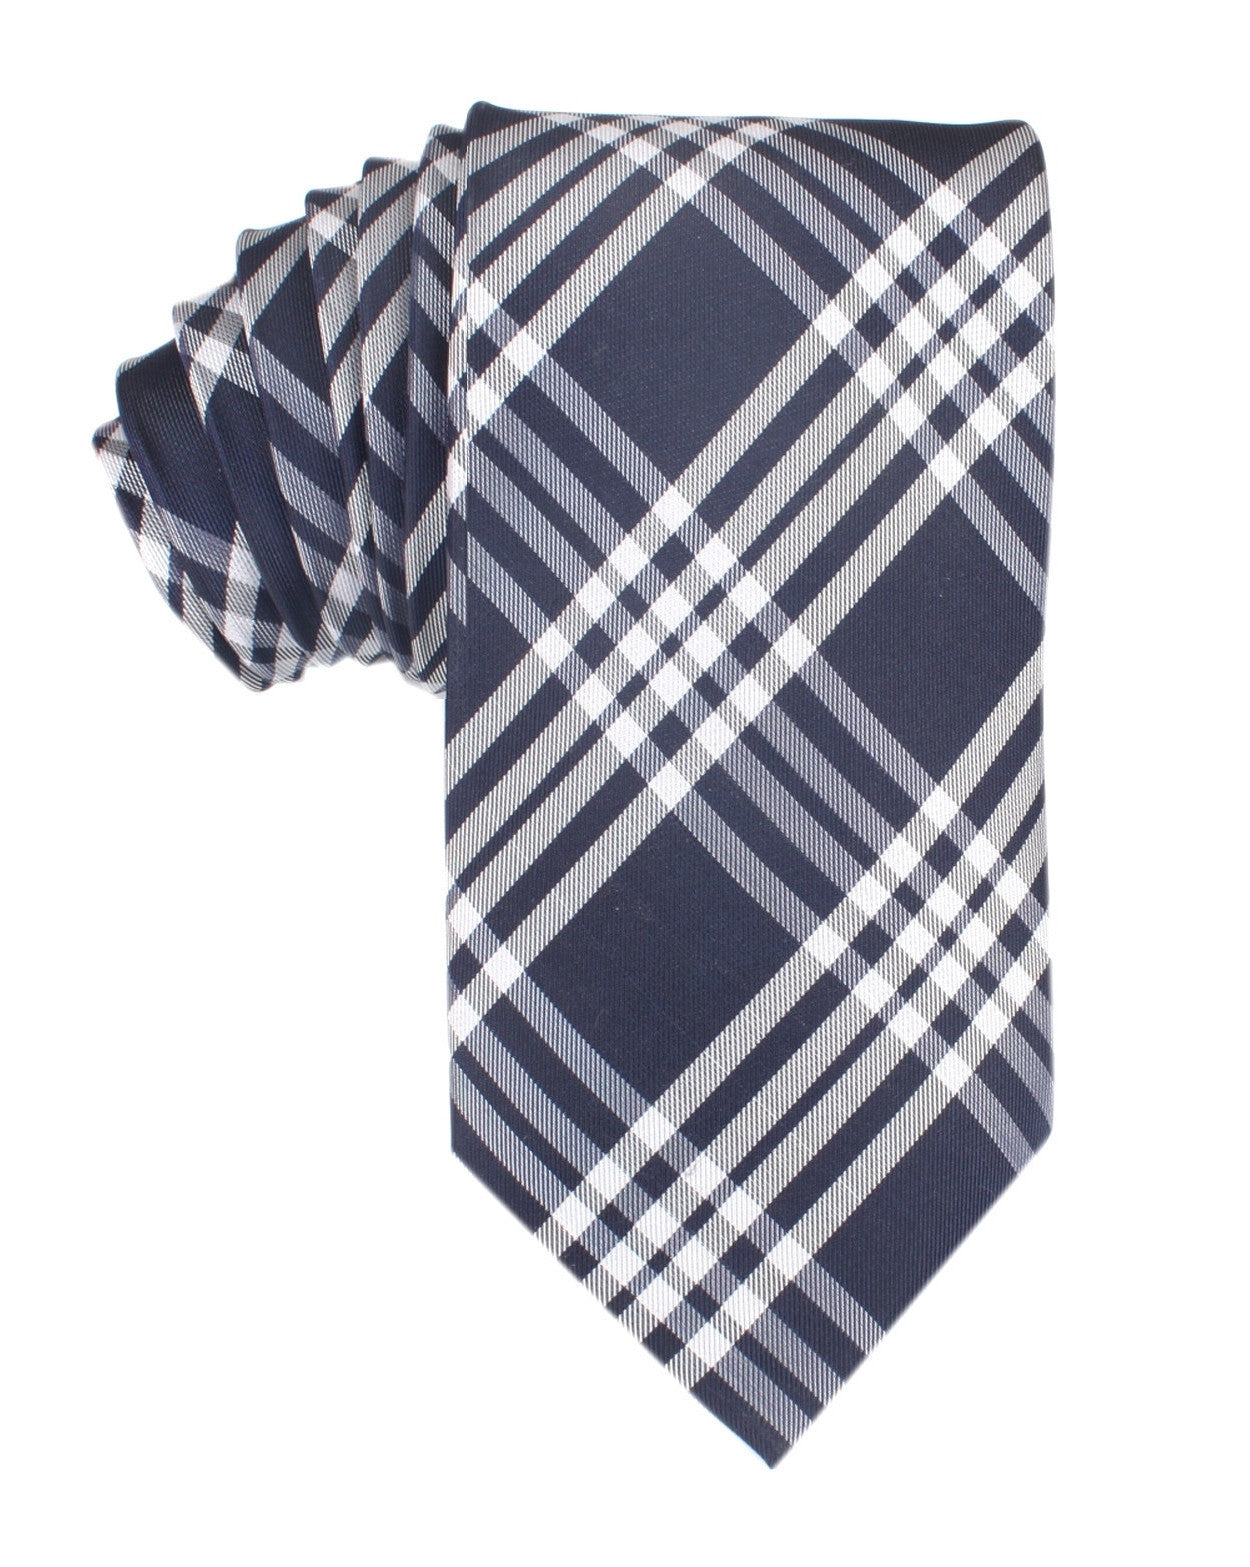 Midnight Blue with White Stripes Necktie | Modern Plaid Ties for Men | OTAA